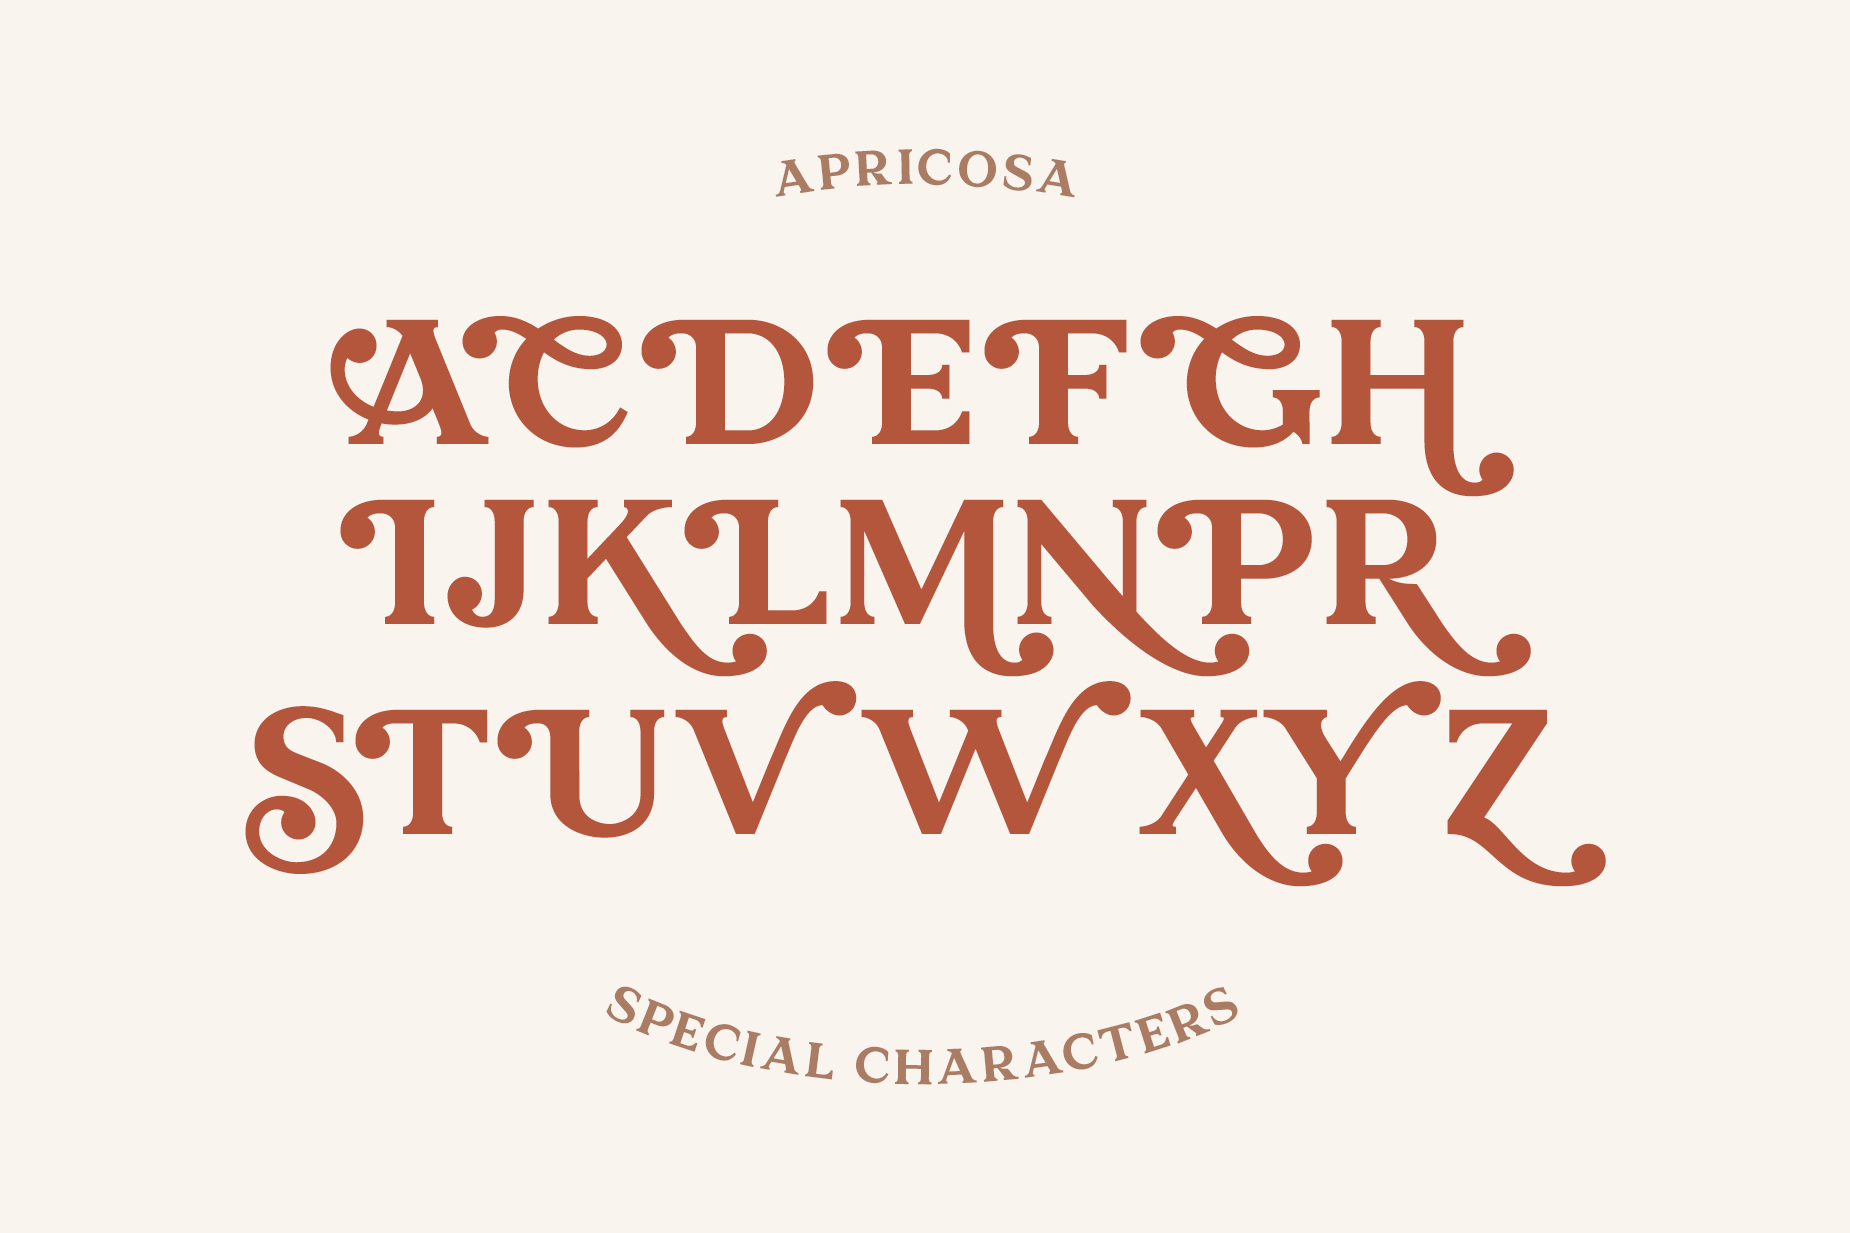 Apricosa Font Alphabet - Alternate Letter Designs